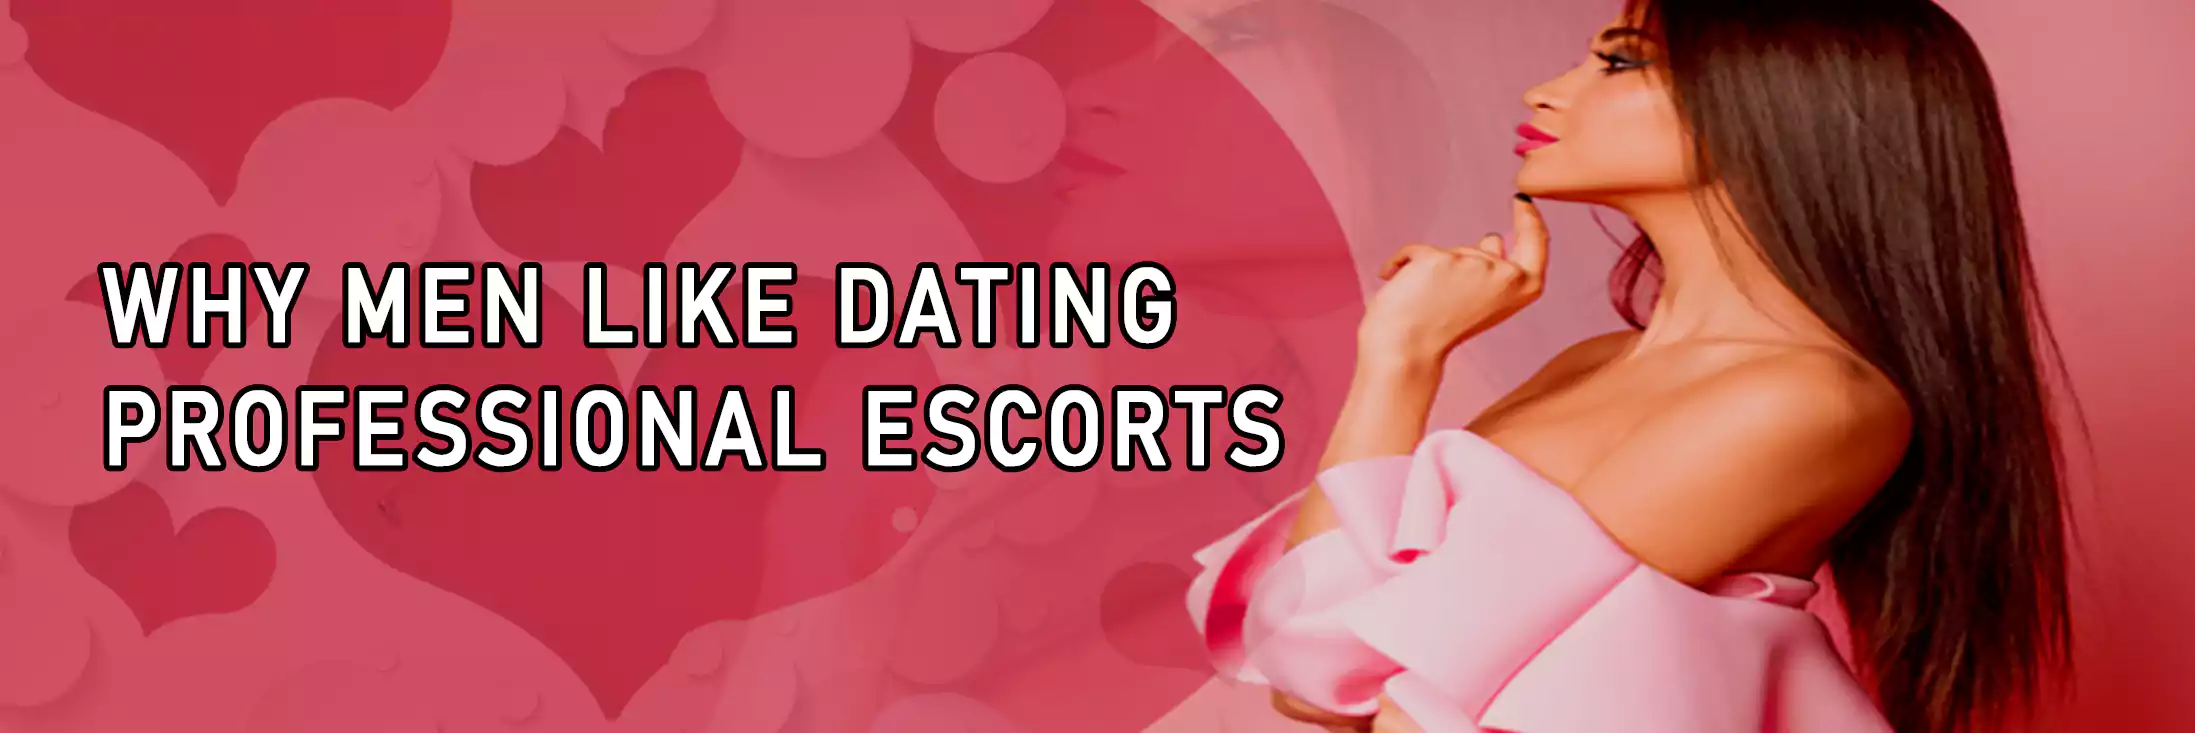 dating professional escorts